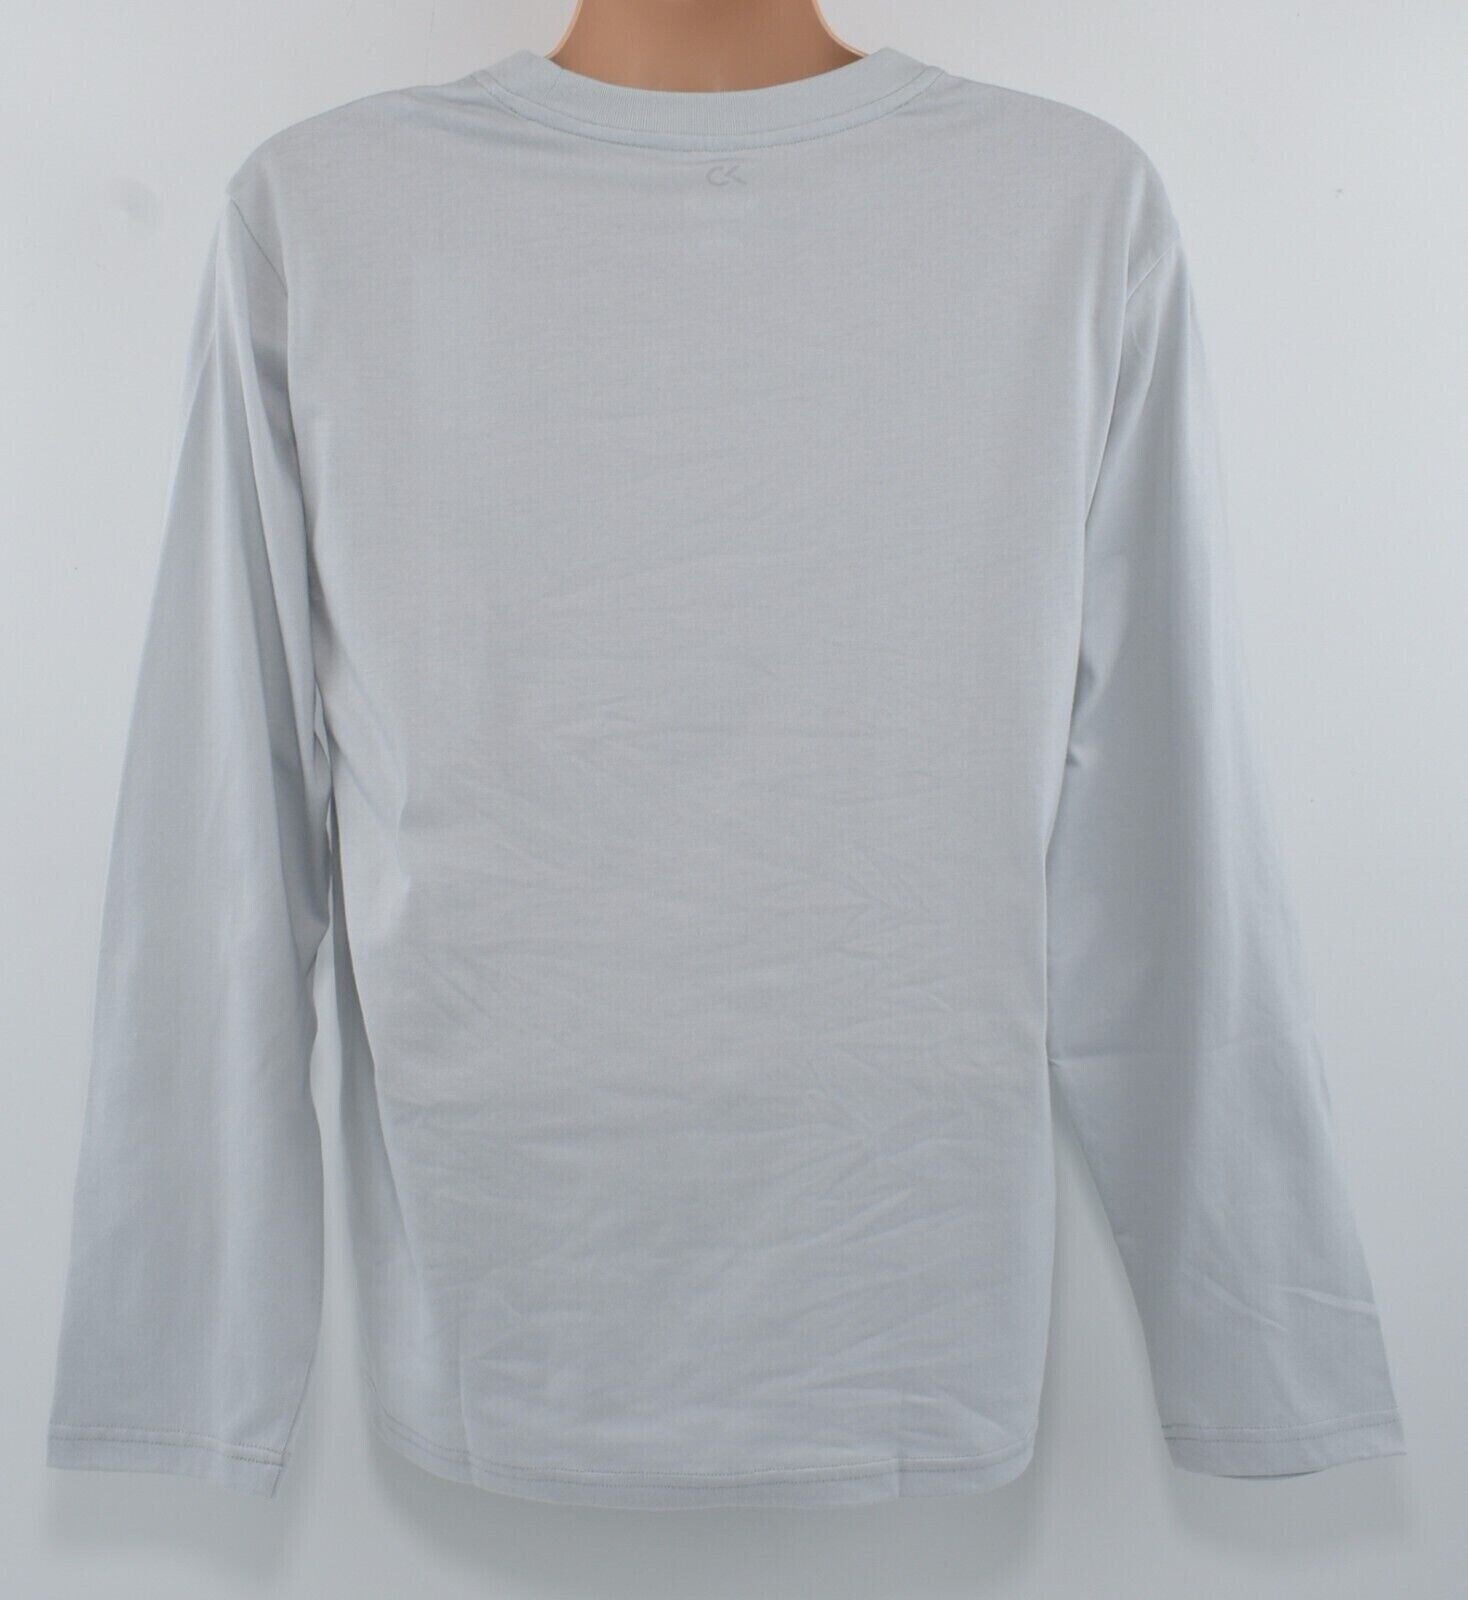 CALVIN KLEIN Performance: Men's Long Sleeve Crew Neck T-shirt Top, Grey, size M